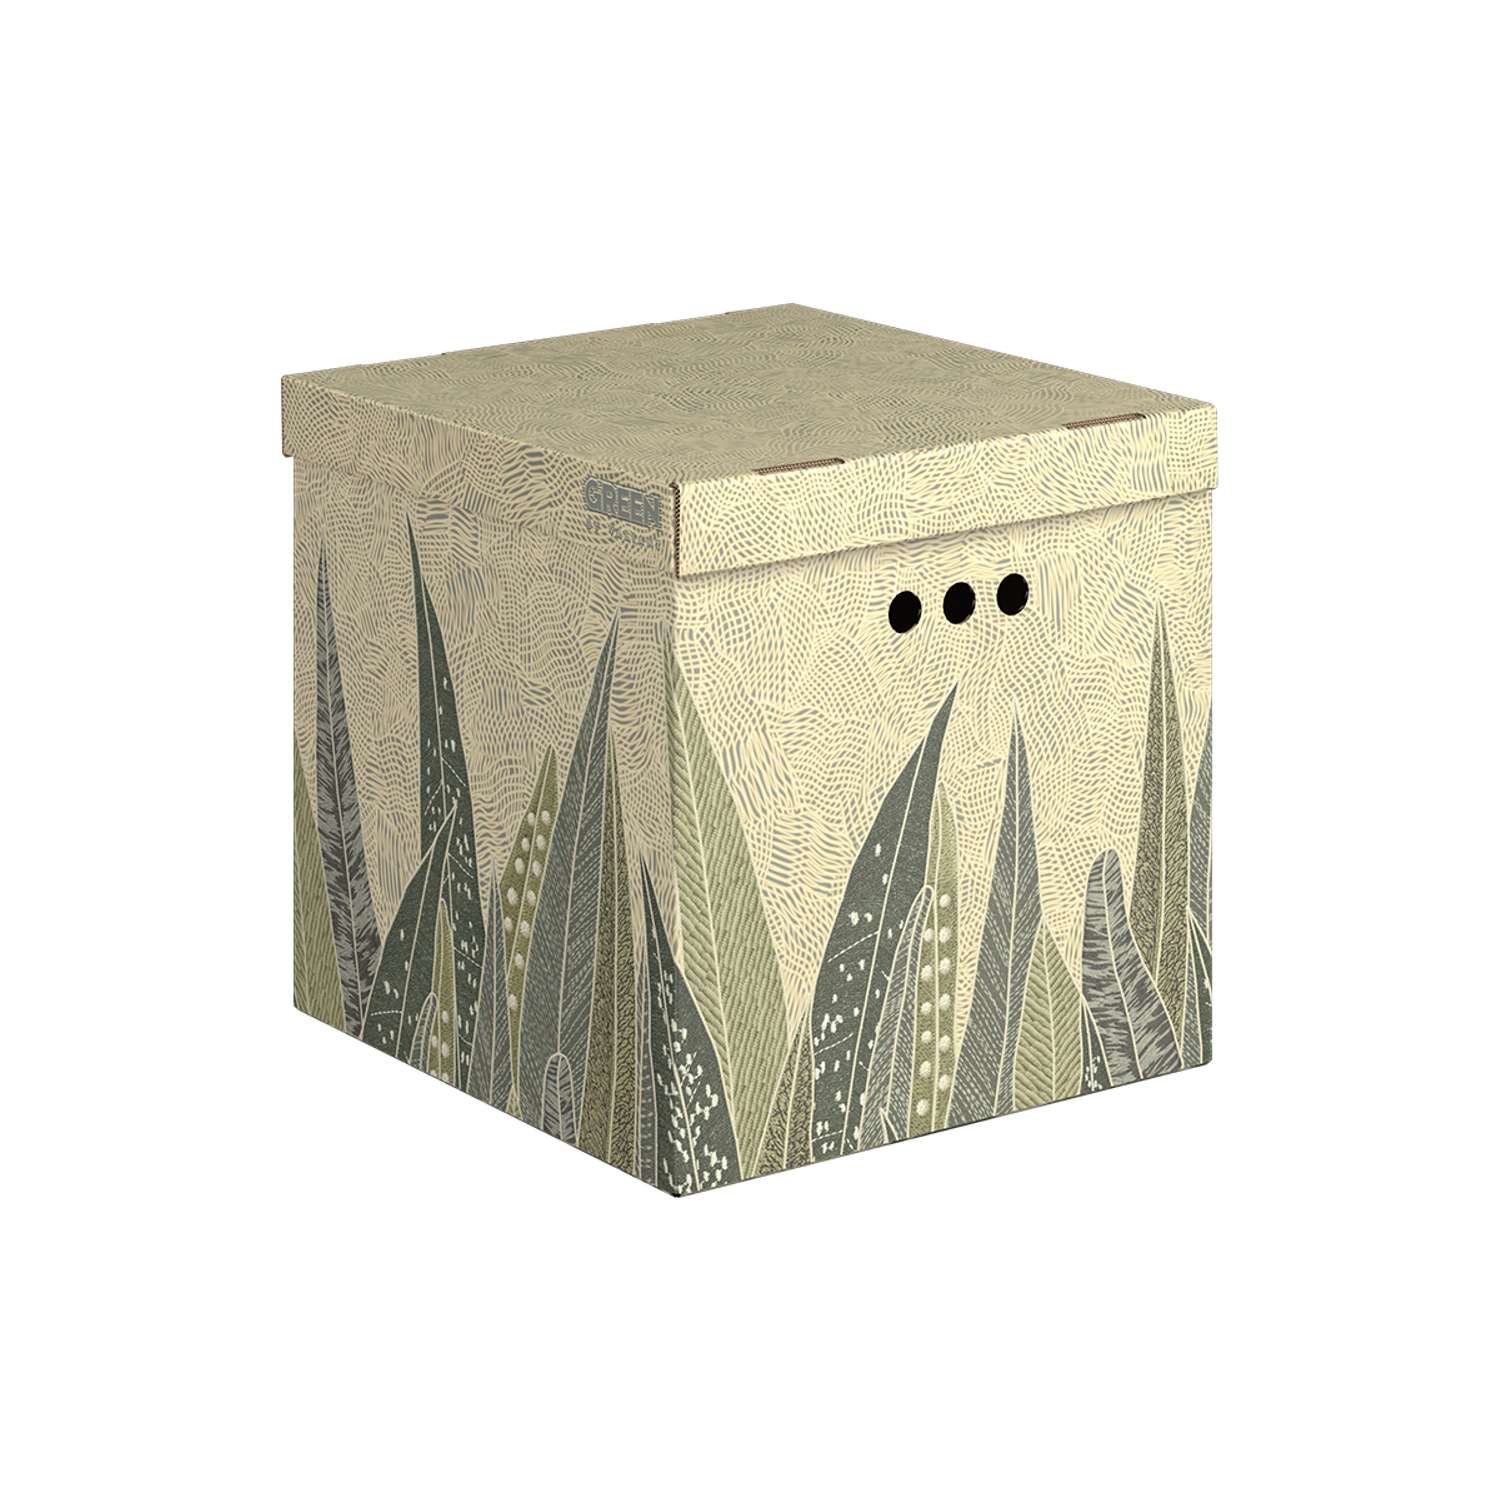 Коробка для хранения VALIANT 31.5*31.5*31.5 см набор 3 шт. - фото 2